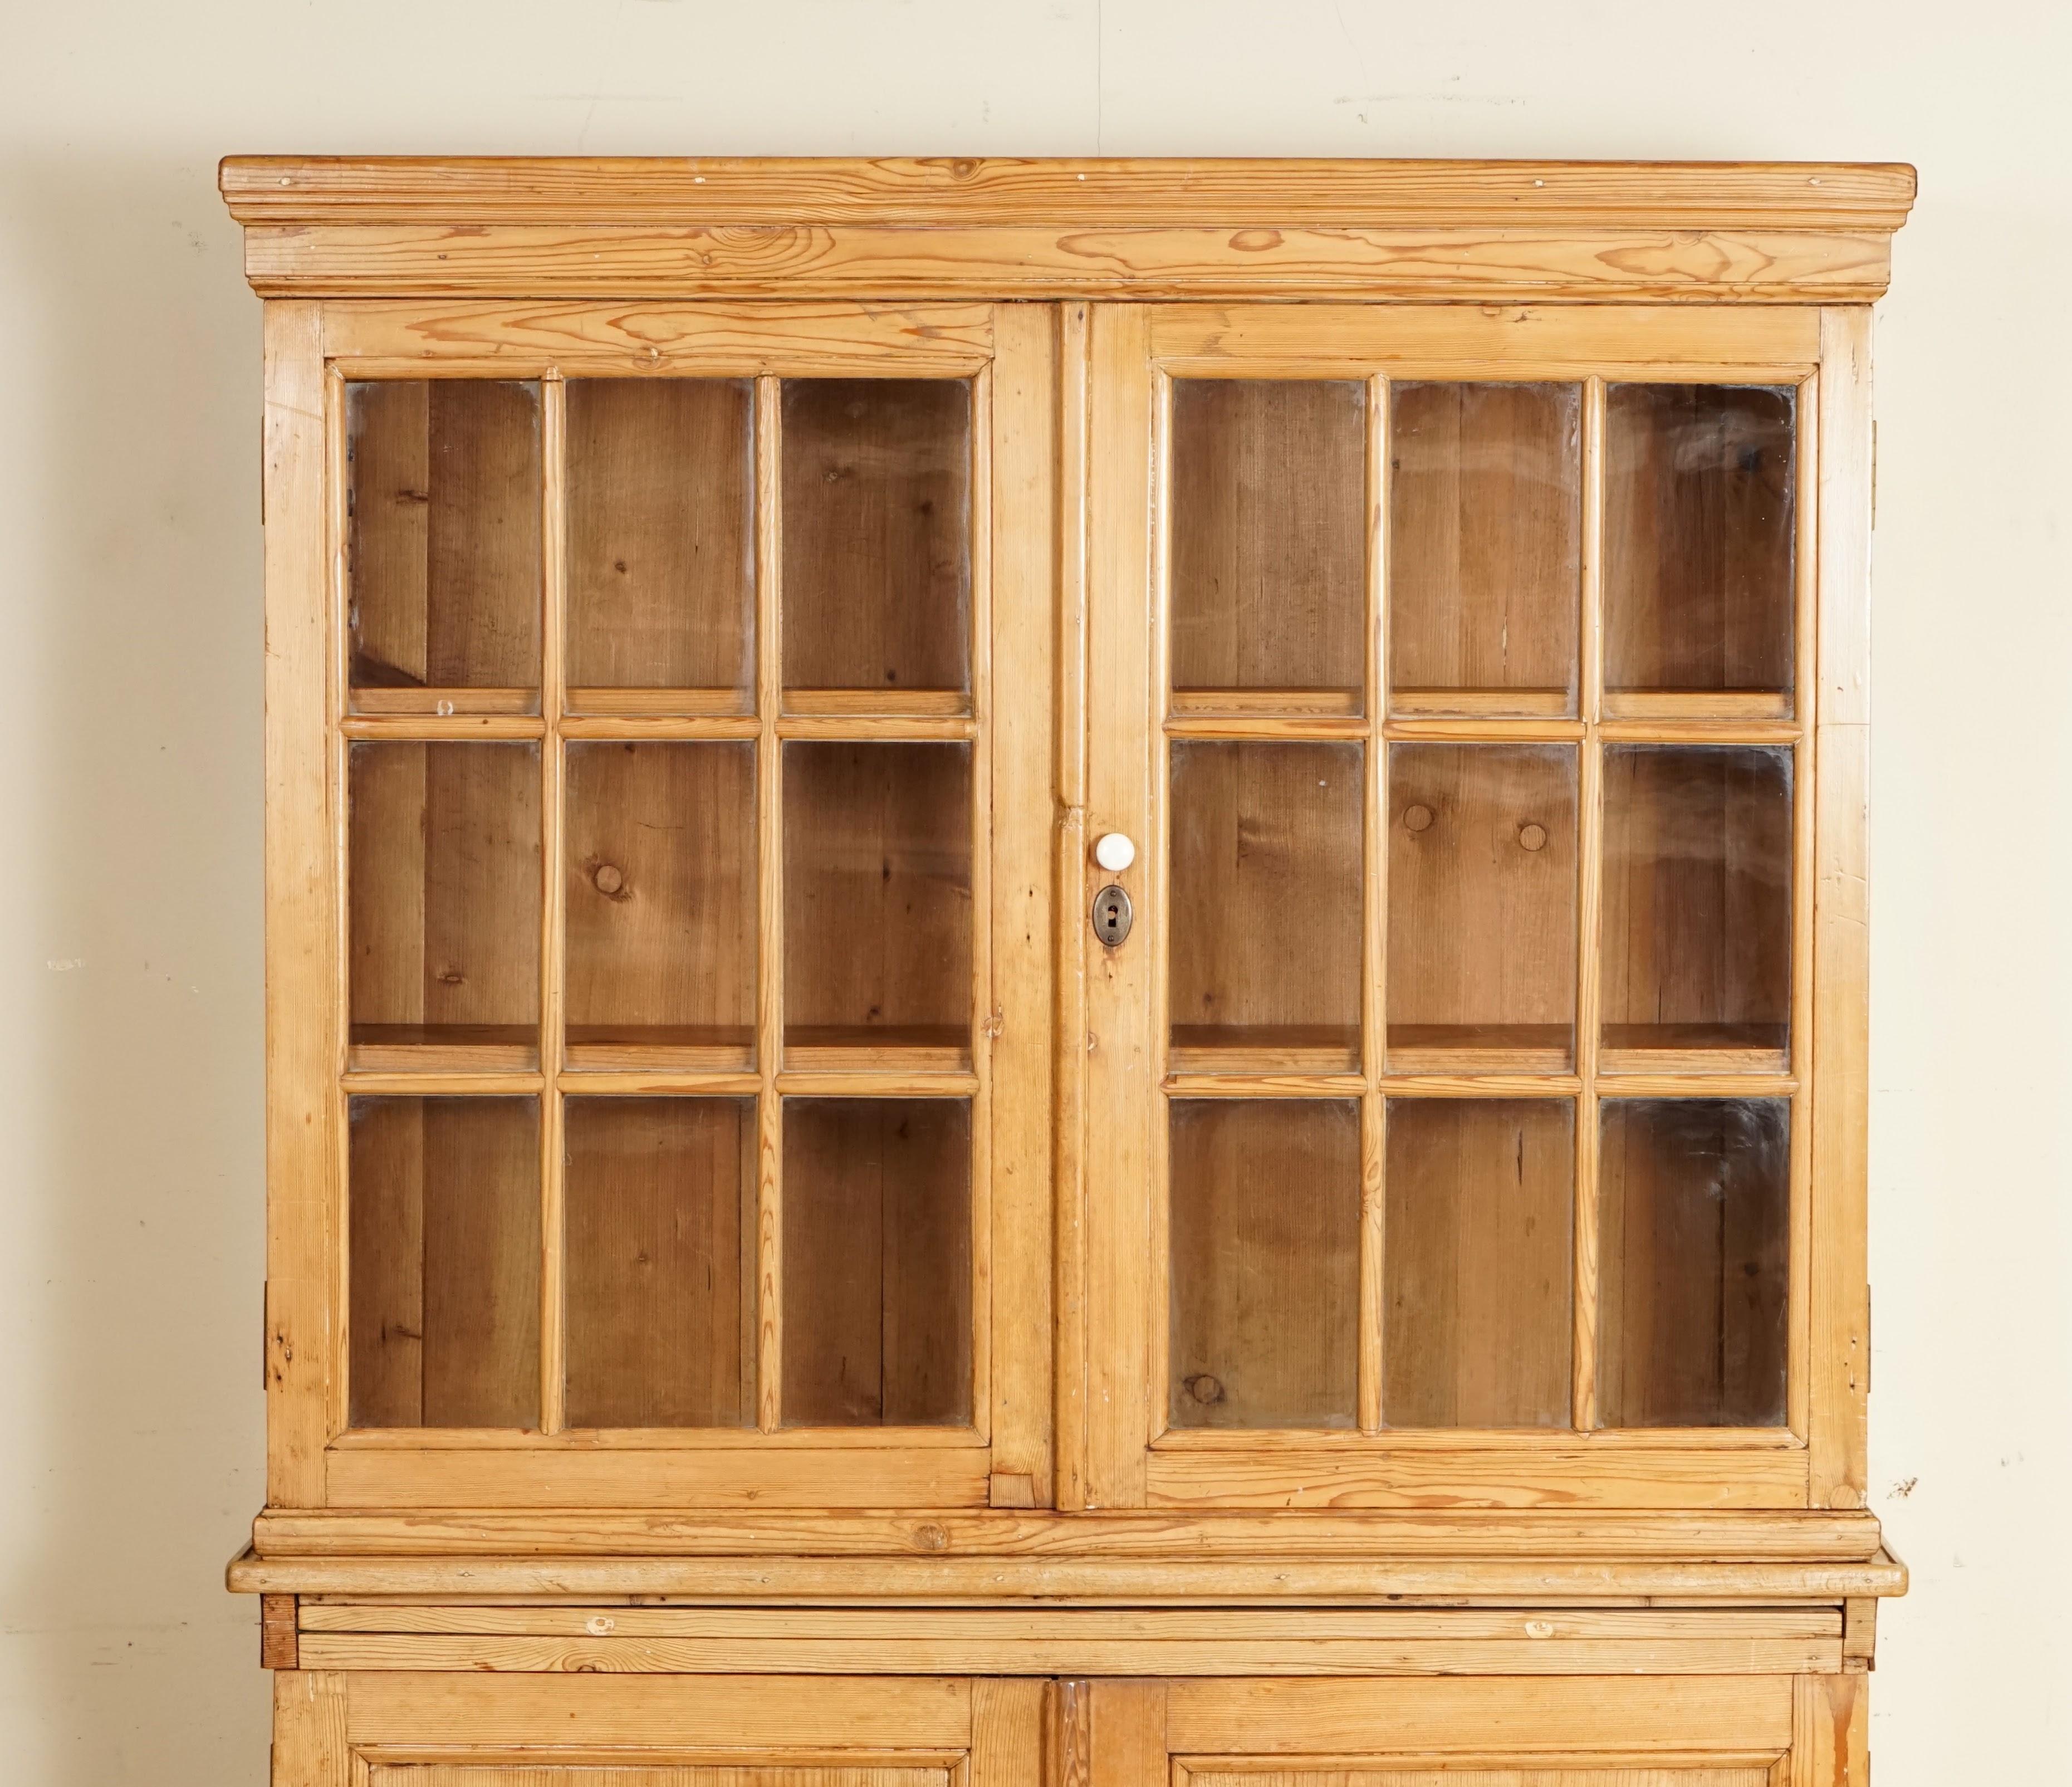 British Rare Antique German Pine Kitchen Cabinet with Adjustable Shelves